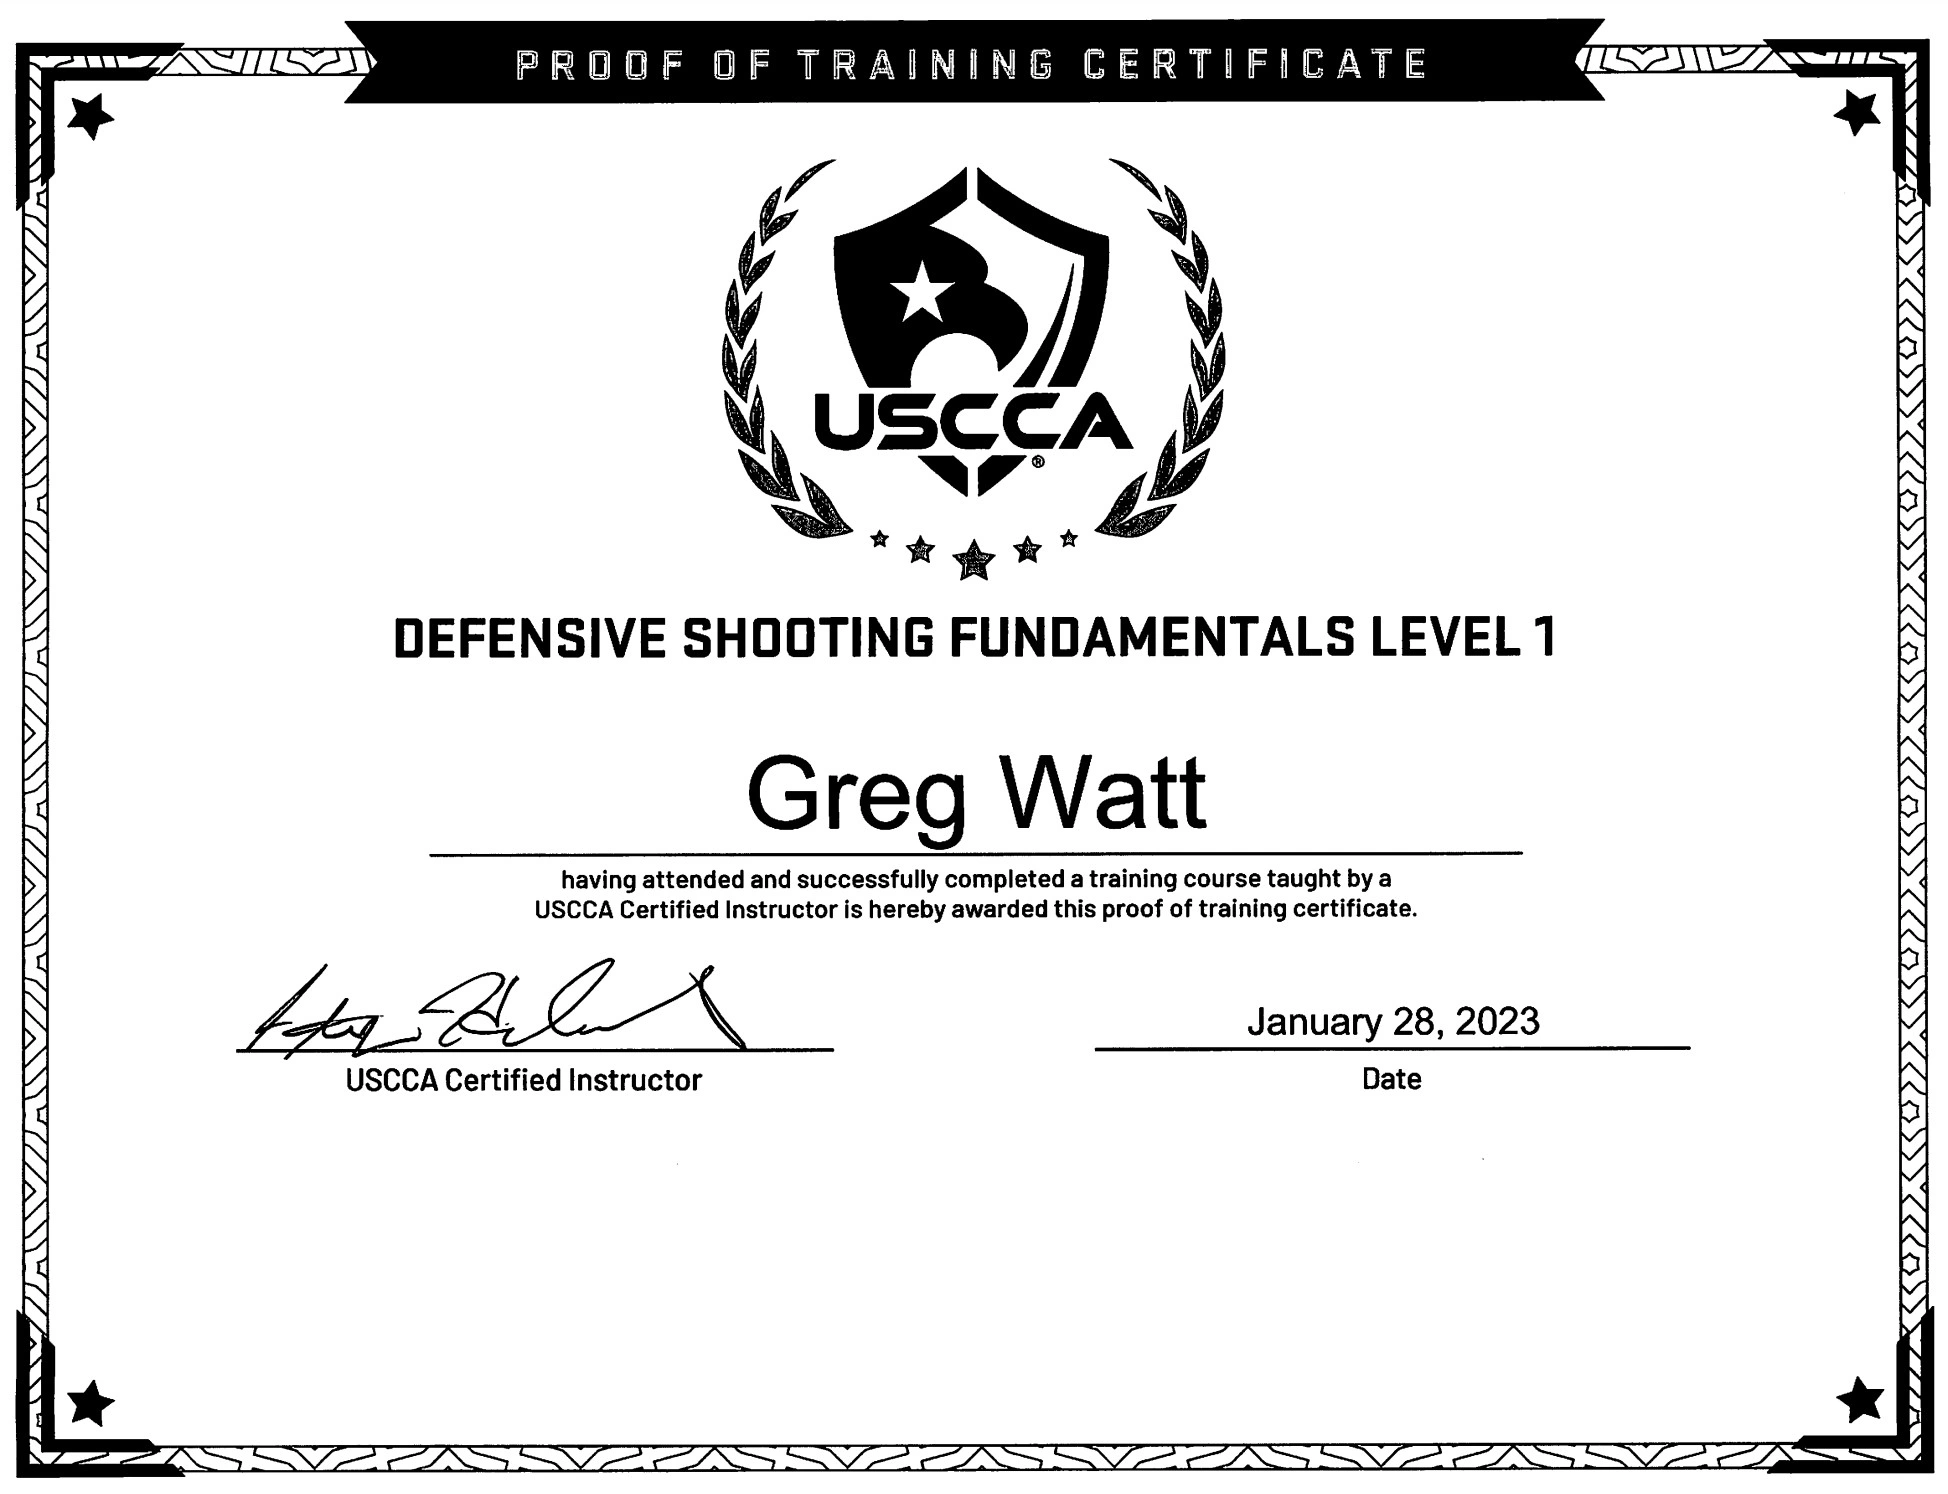 Defensive Shooting Fundamentals Certificate for Greg Watt